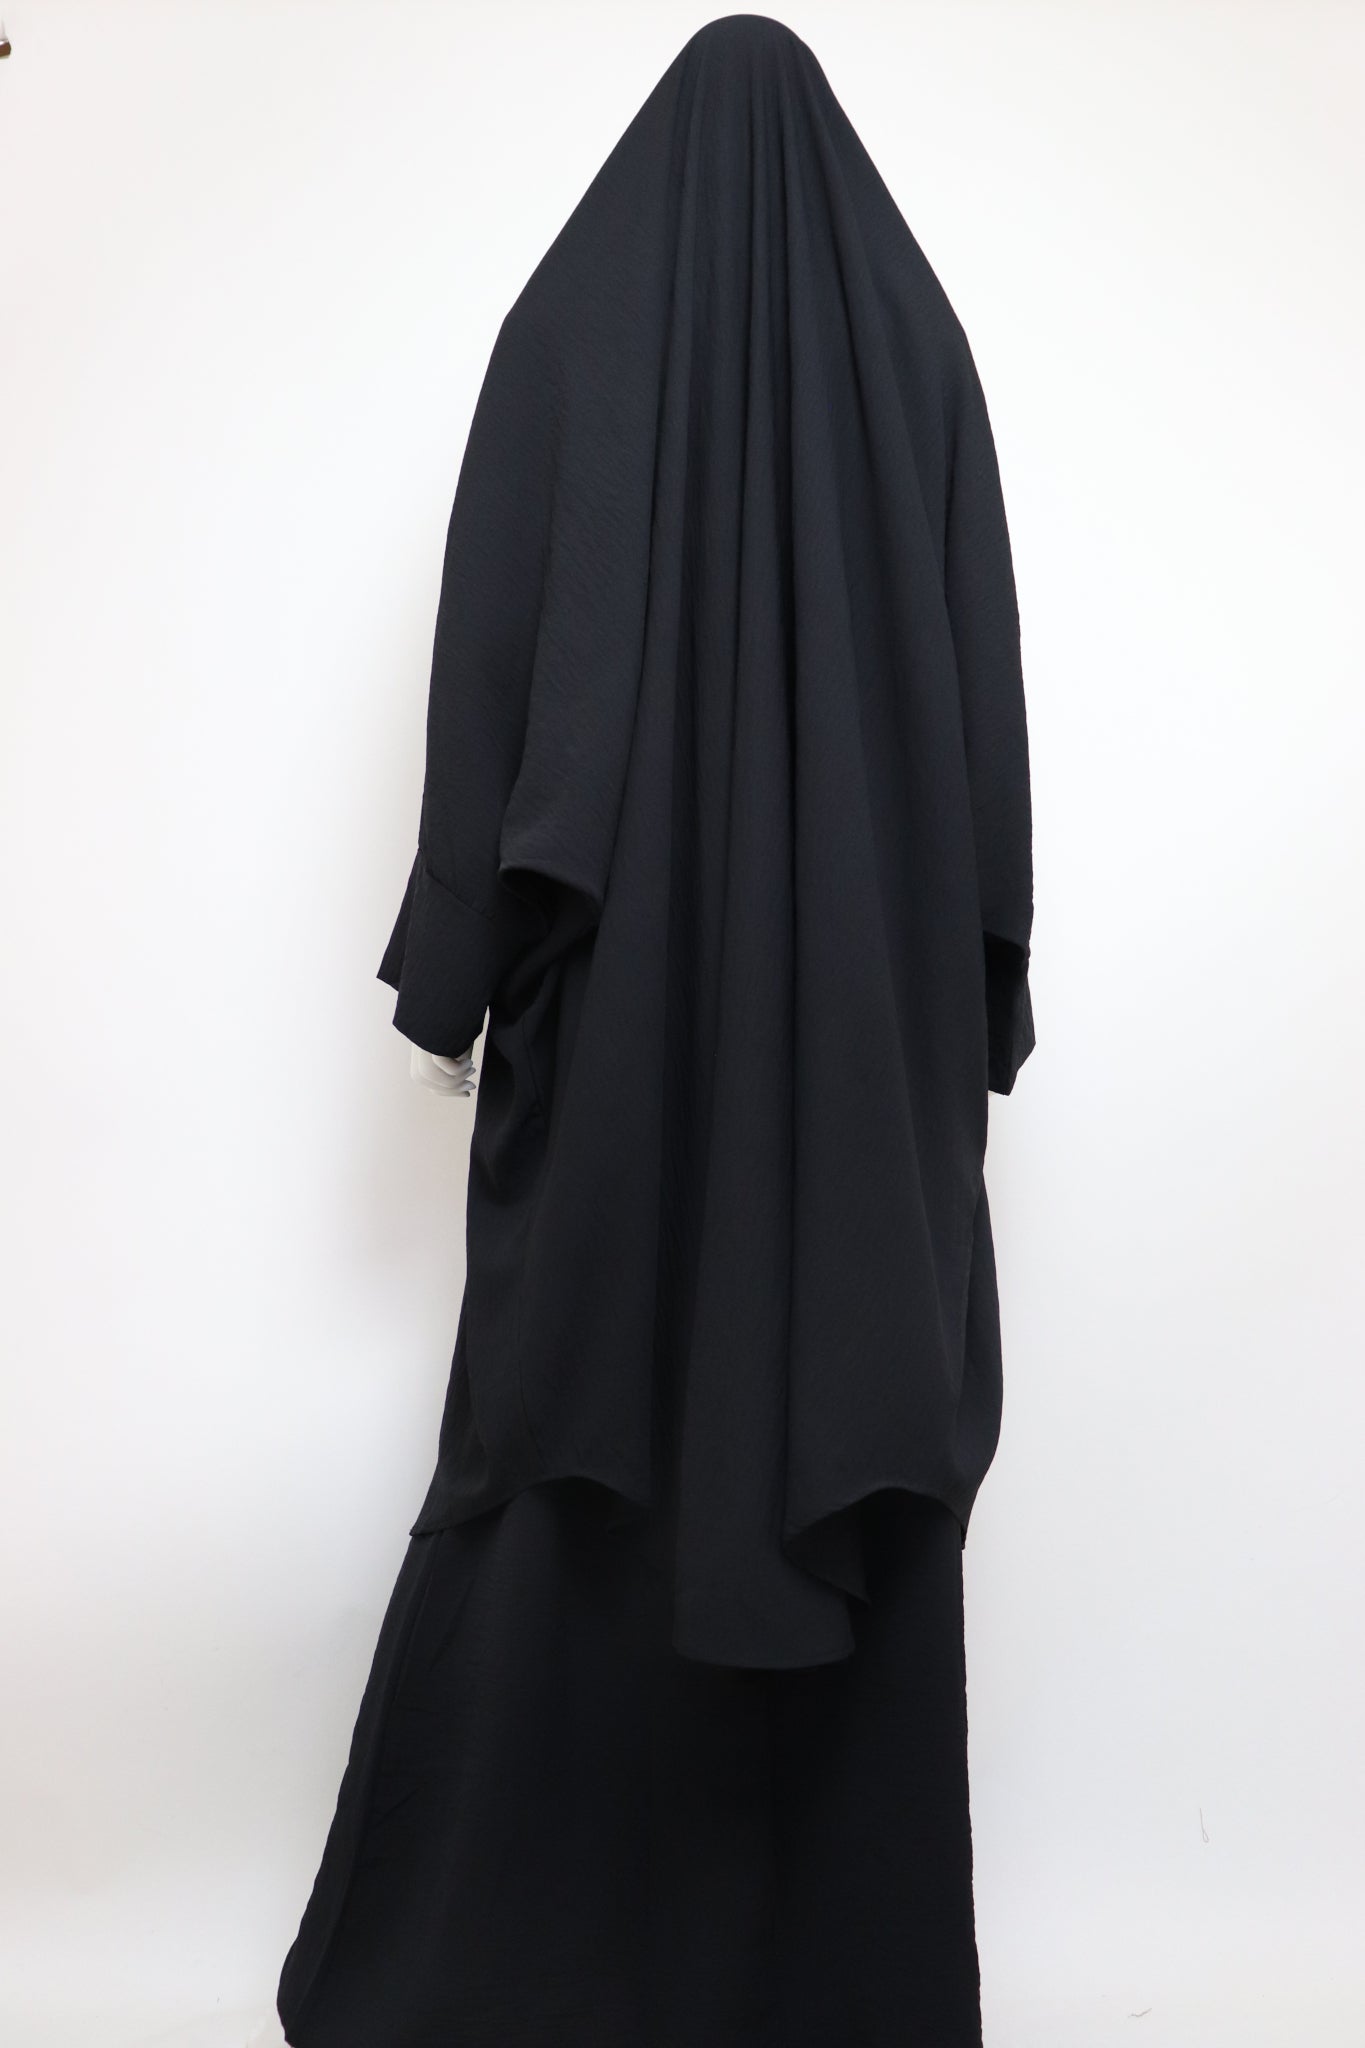 2 Piece Jilbab Dress Set - Black